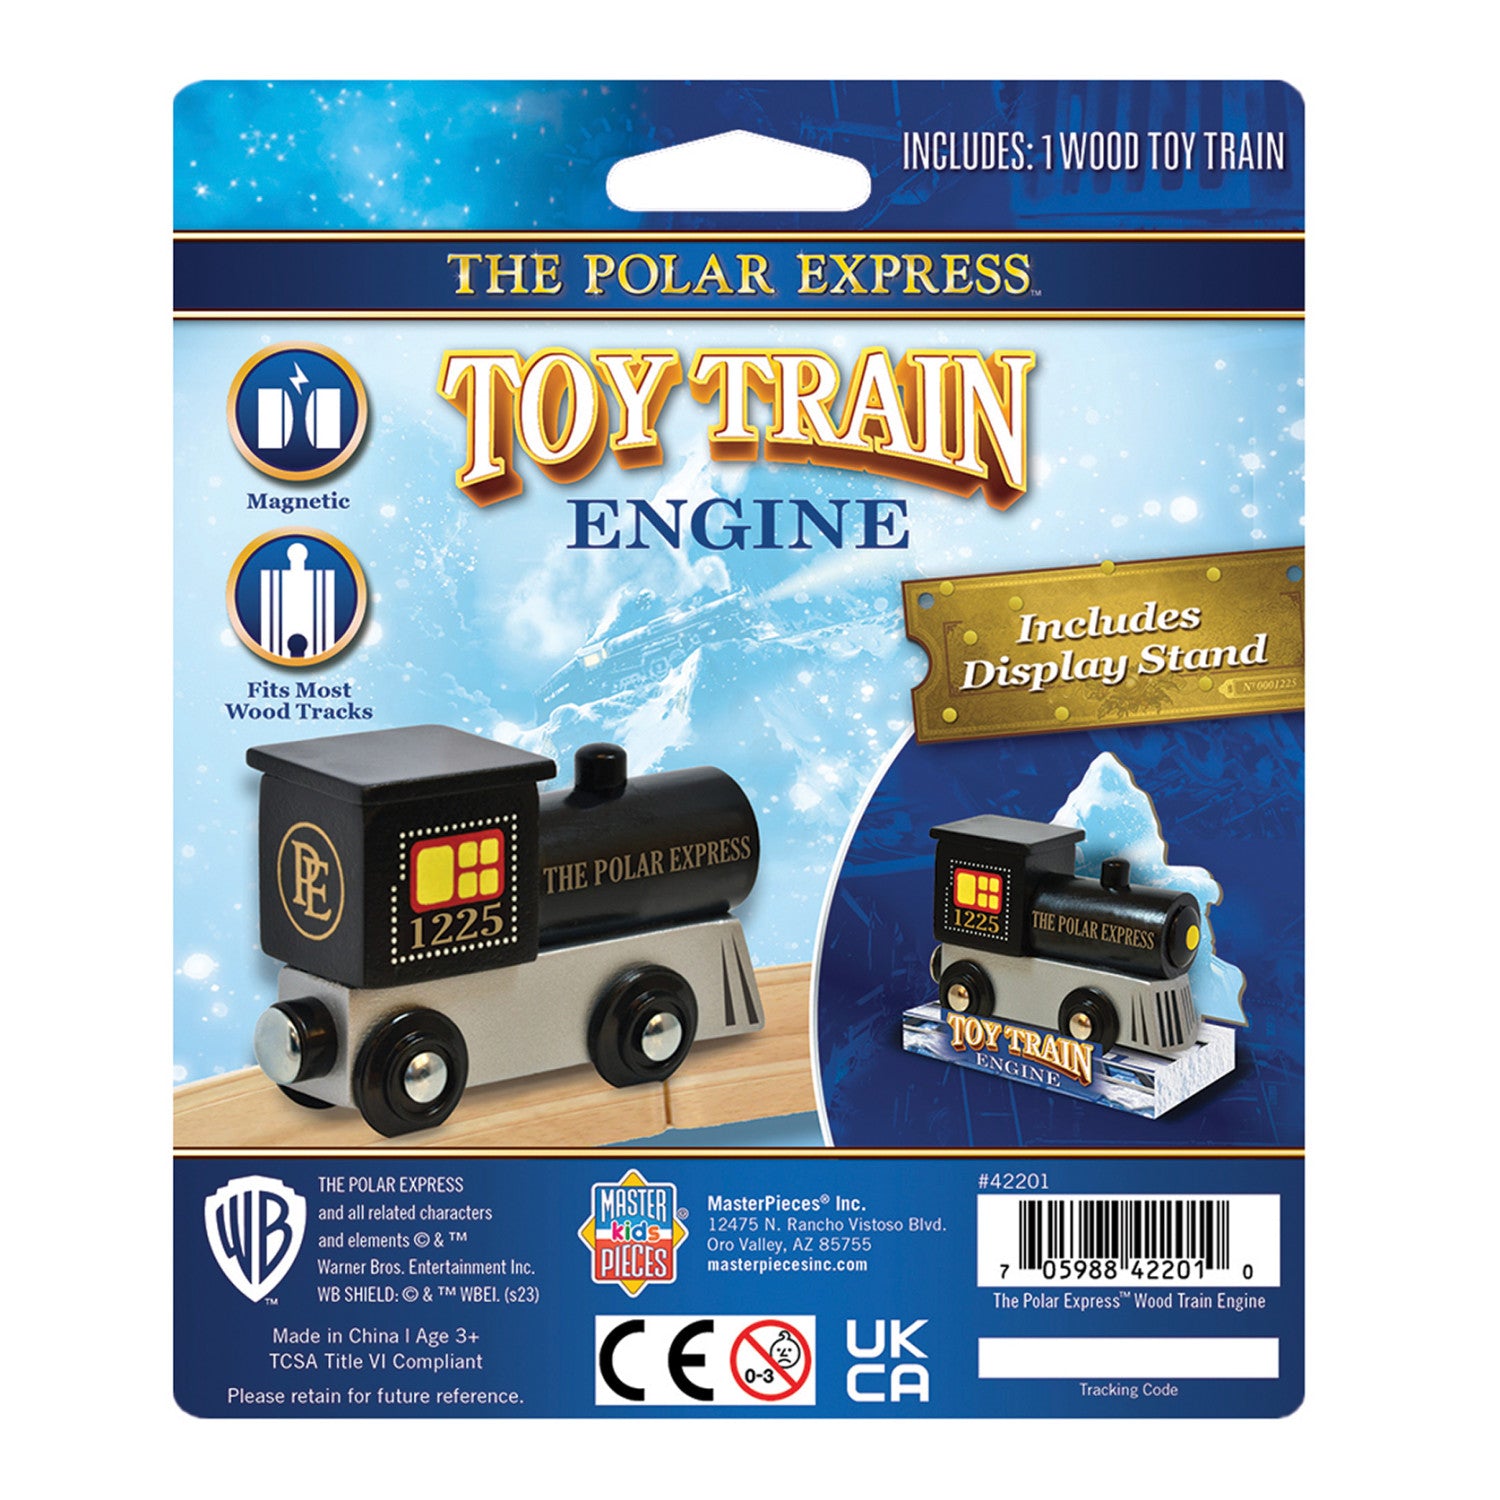 The Polar Express Toy Train Engine